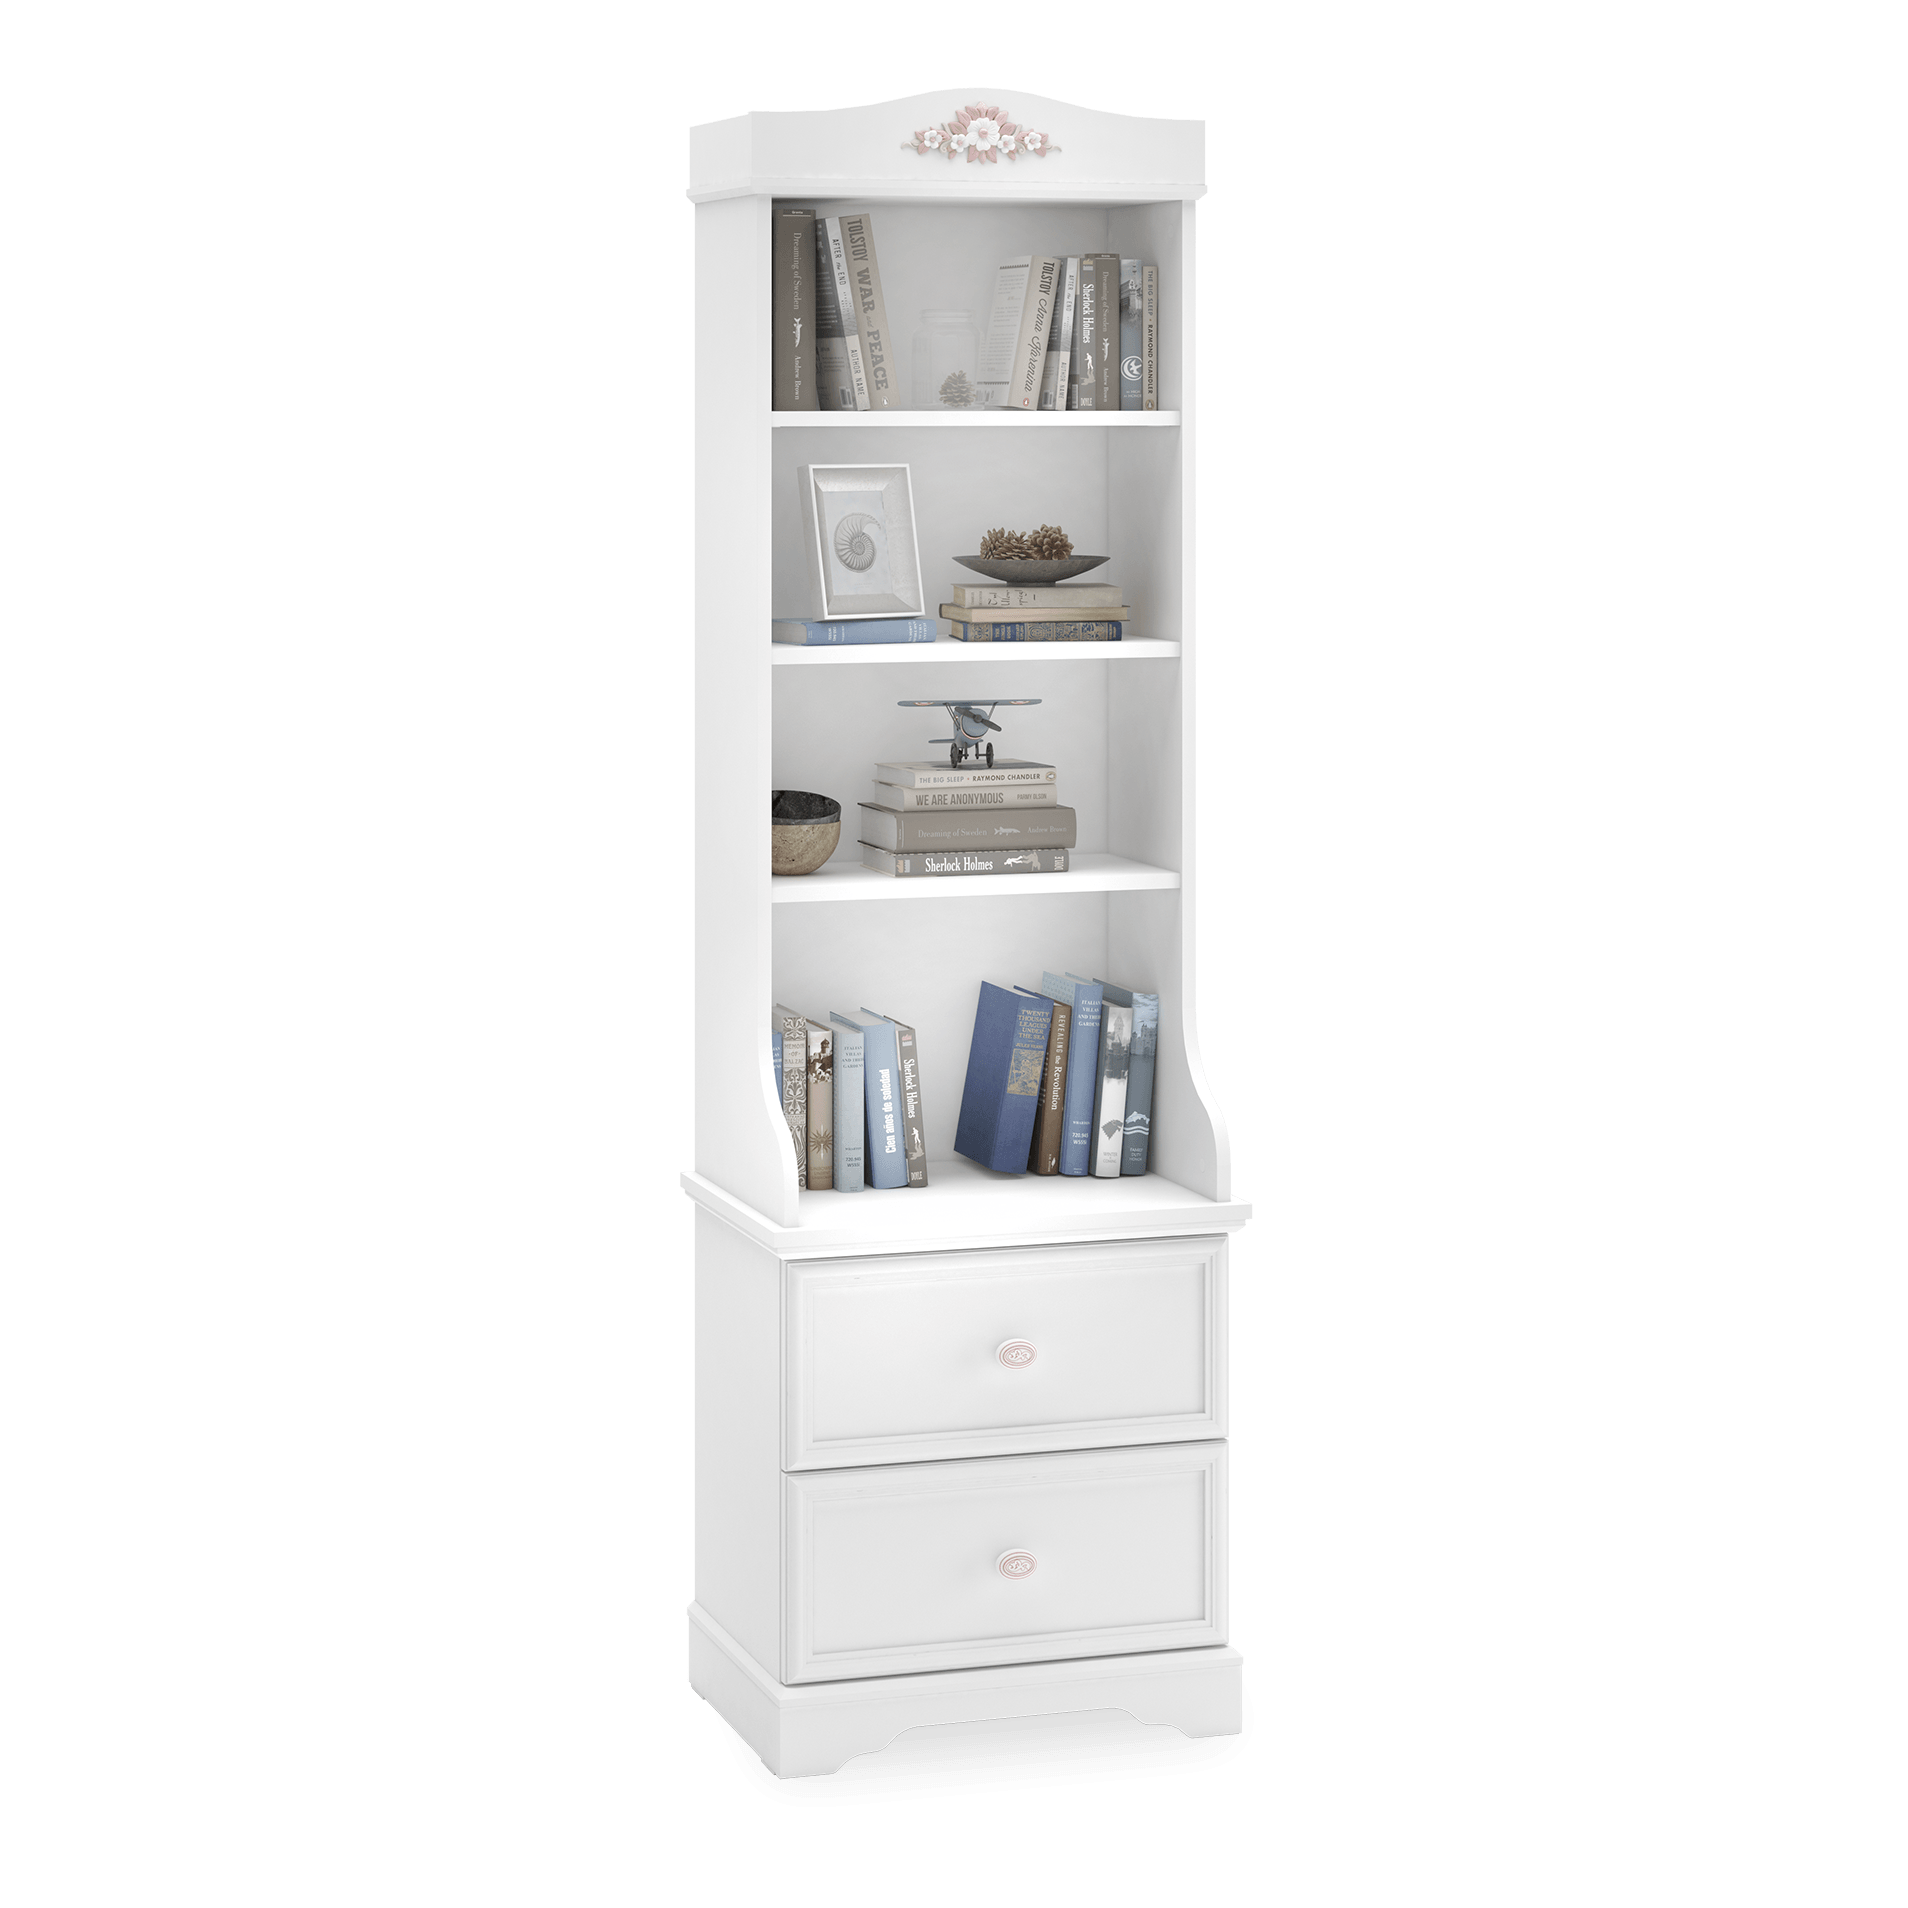 Cilek Rustic White Bookcase - Kids Haven